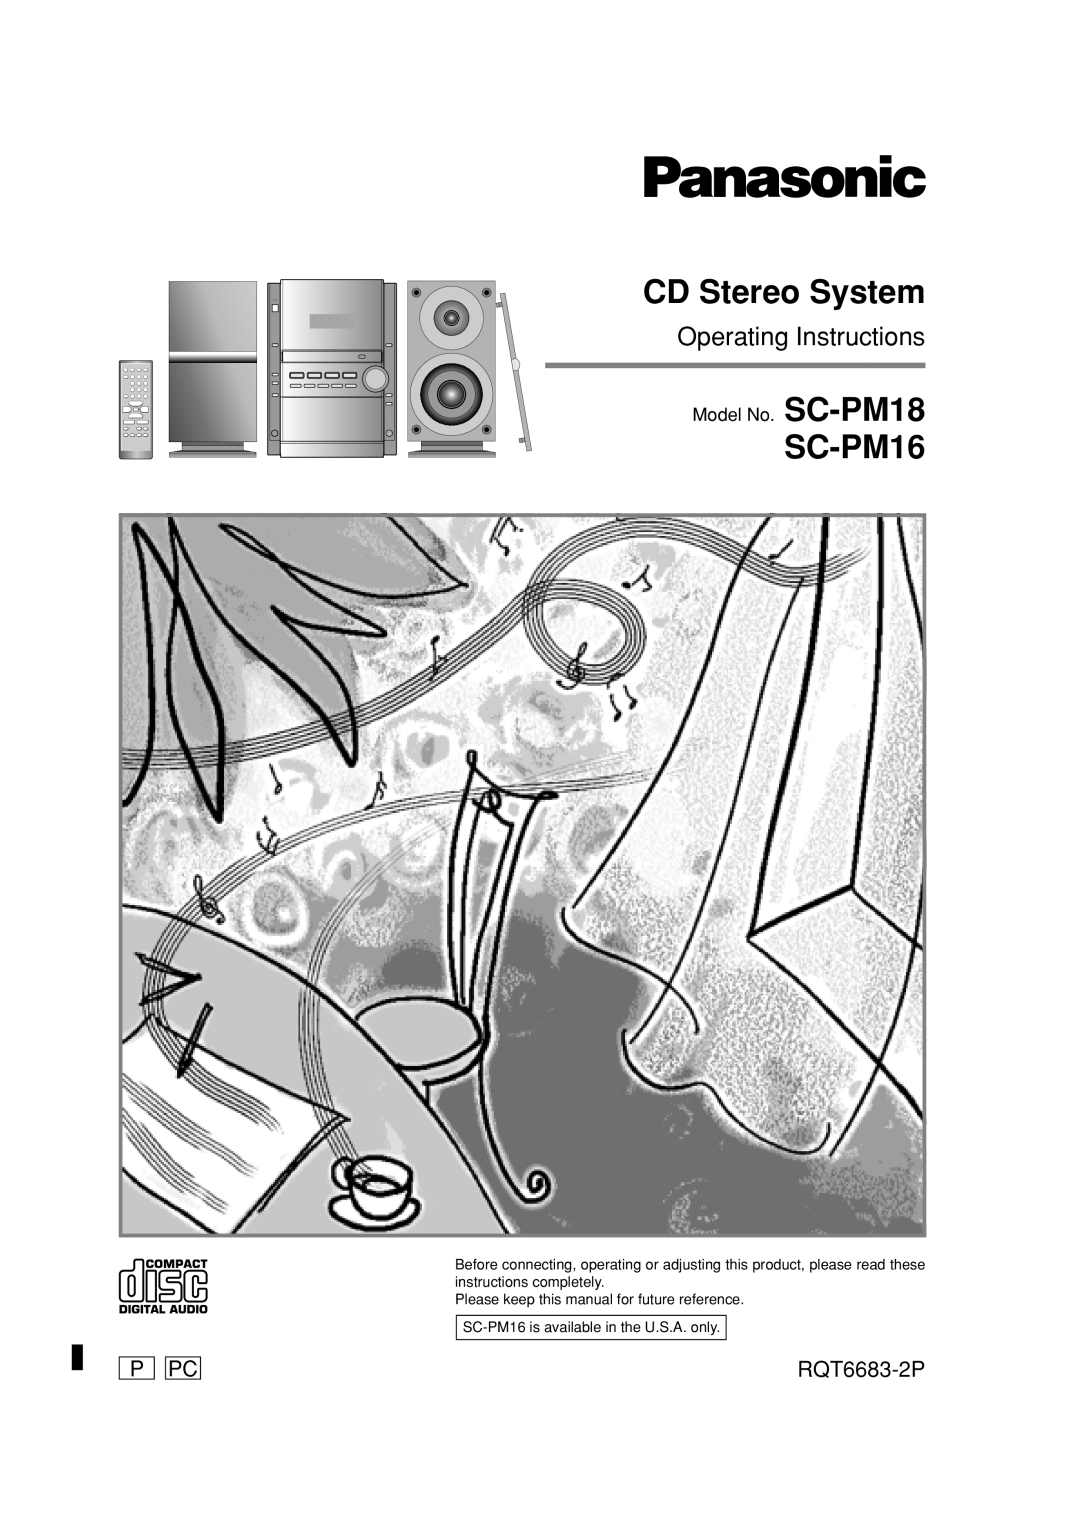 Panasonic manual P Pc, RQT6683-2P, Model No. SC-PM18, CD Stereo System, SC-PM16, Operating Instructions 